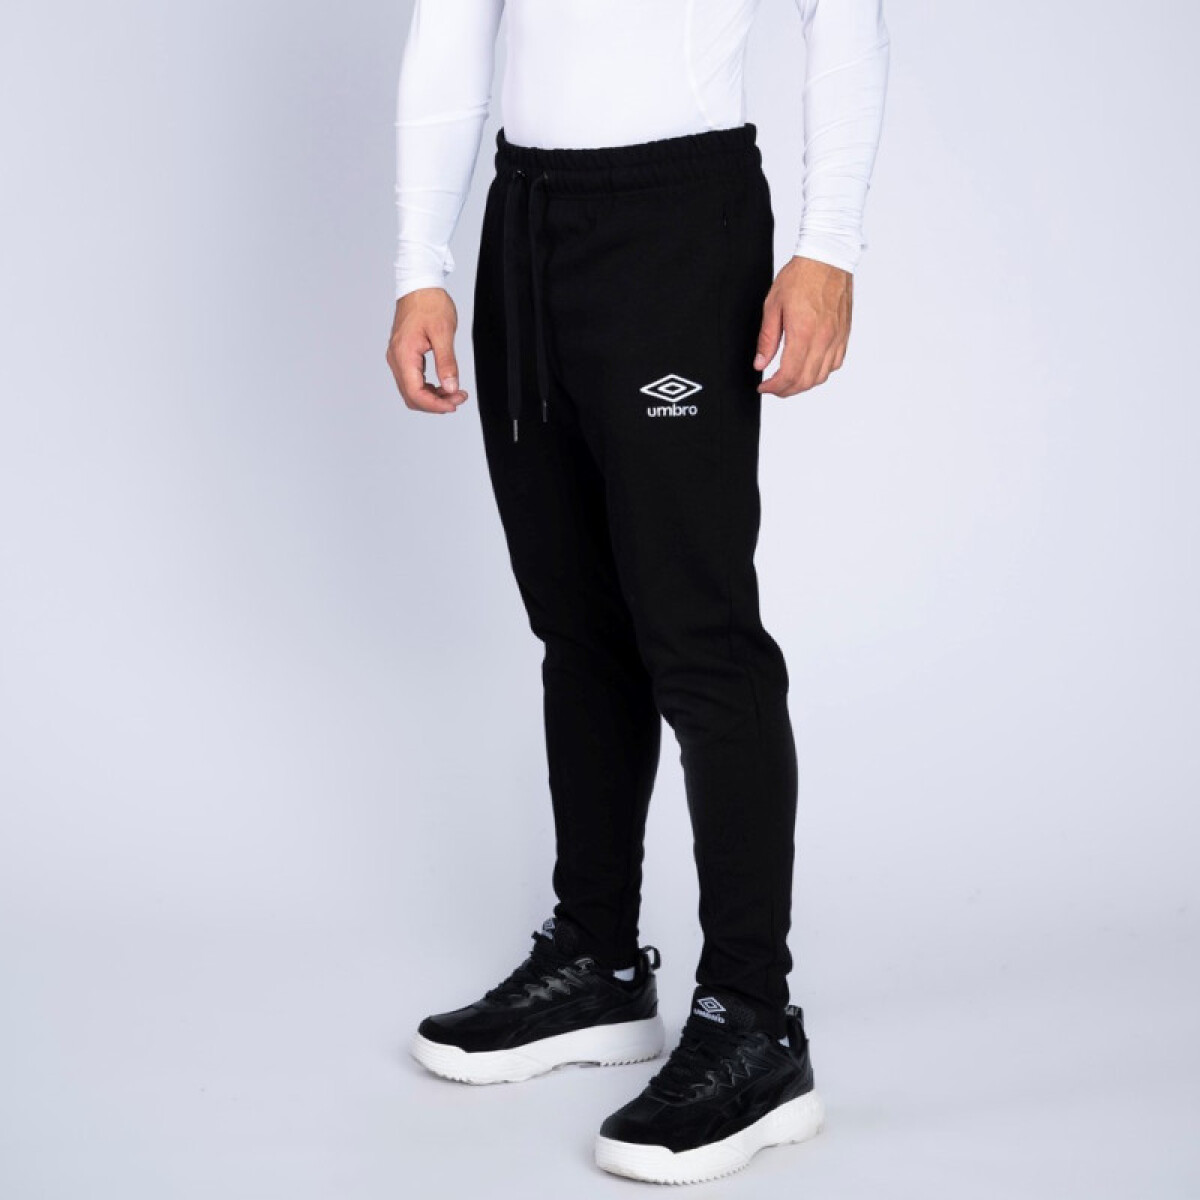 Pantalon Umbro Basico Hombre c/puño Negro - Color Único 